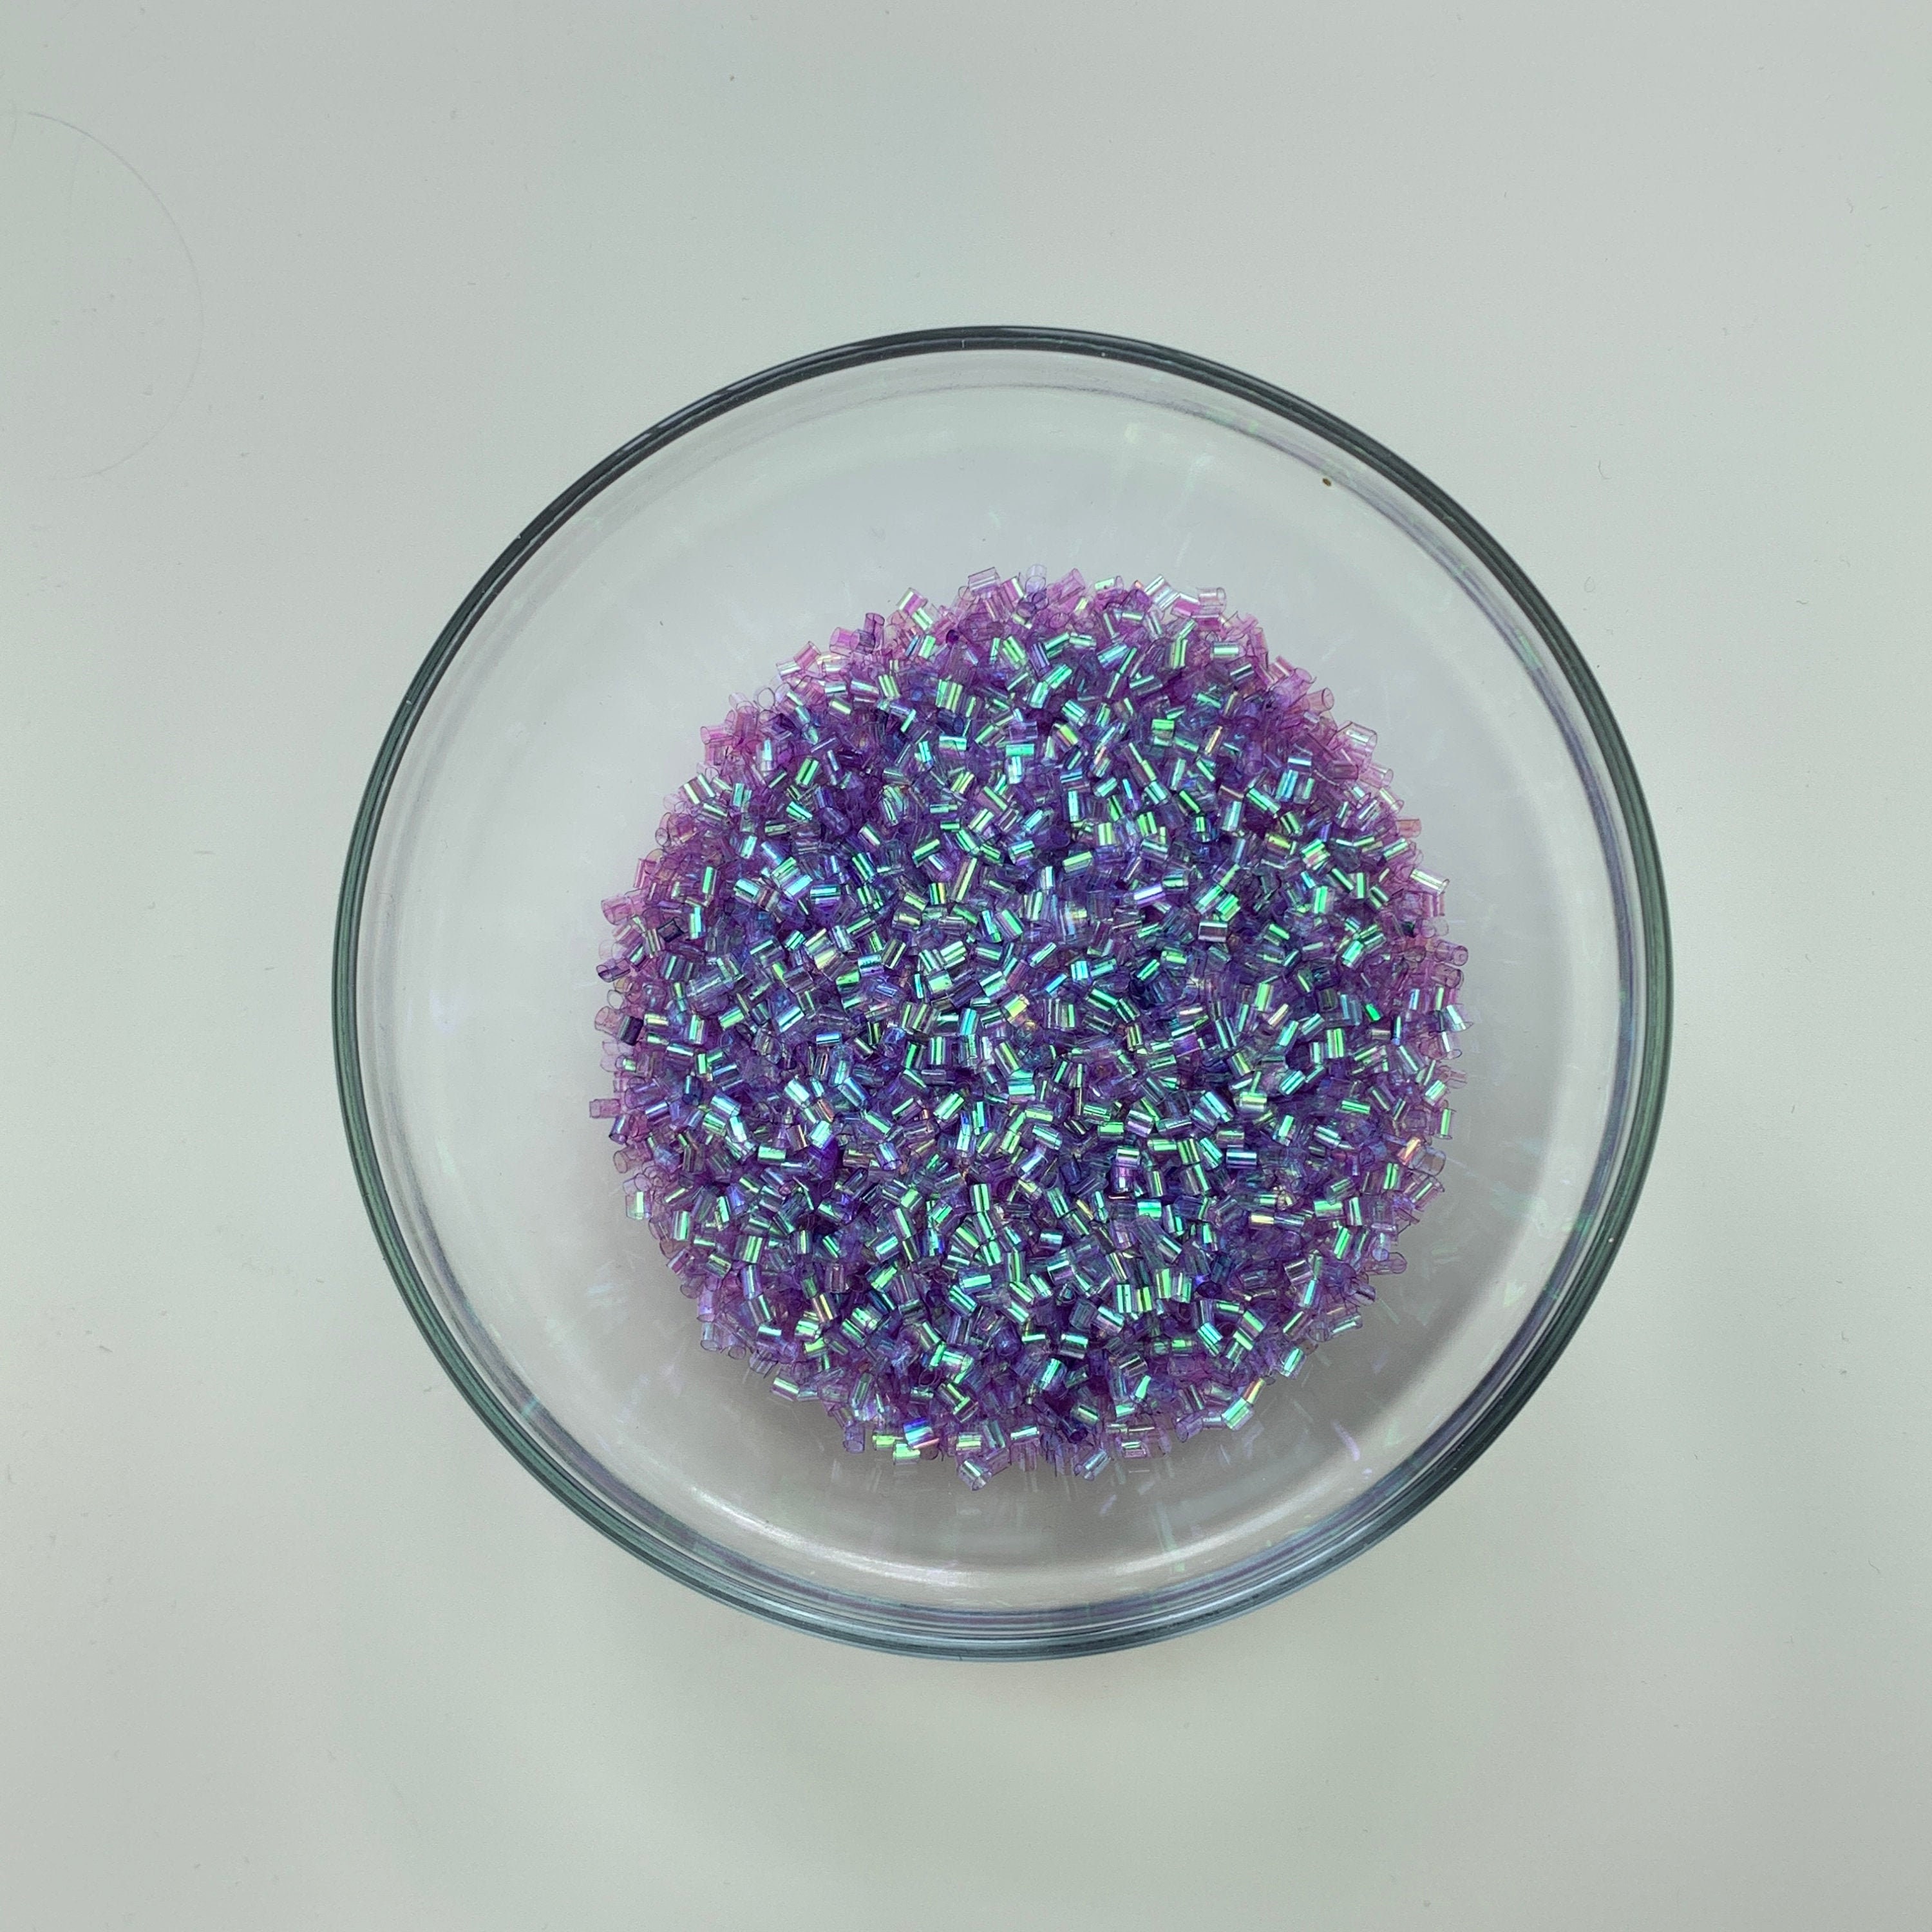 Purple 100g Bingsu Beads Slime Crunchy Iridescent Crafting Slime Supplies  Cut Plastic Straws